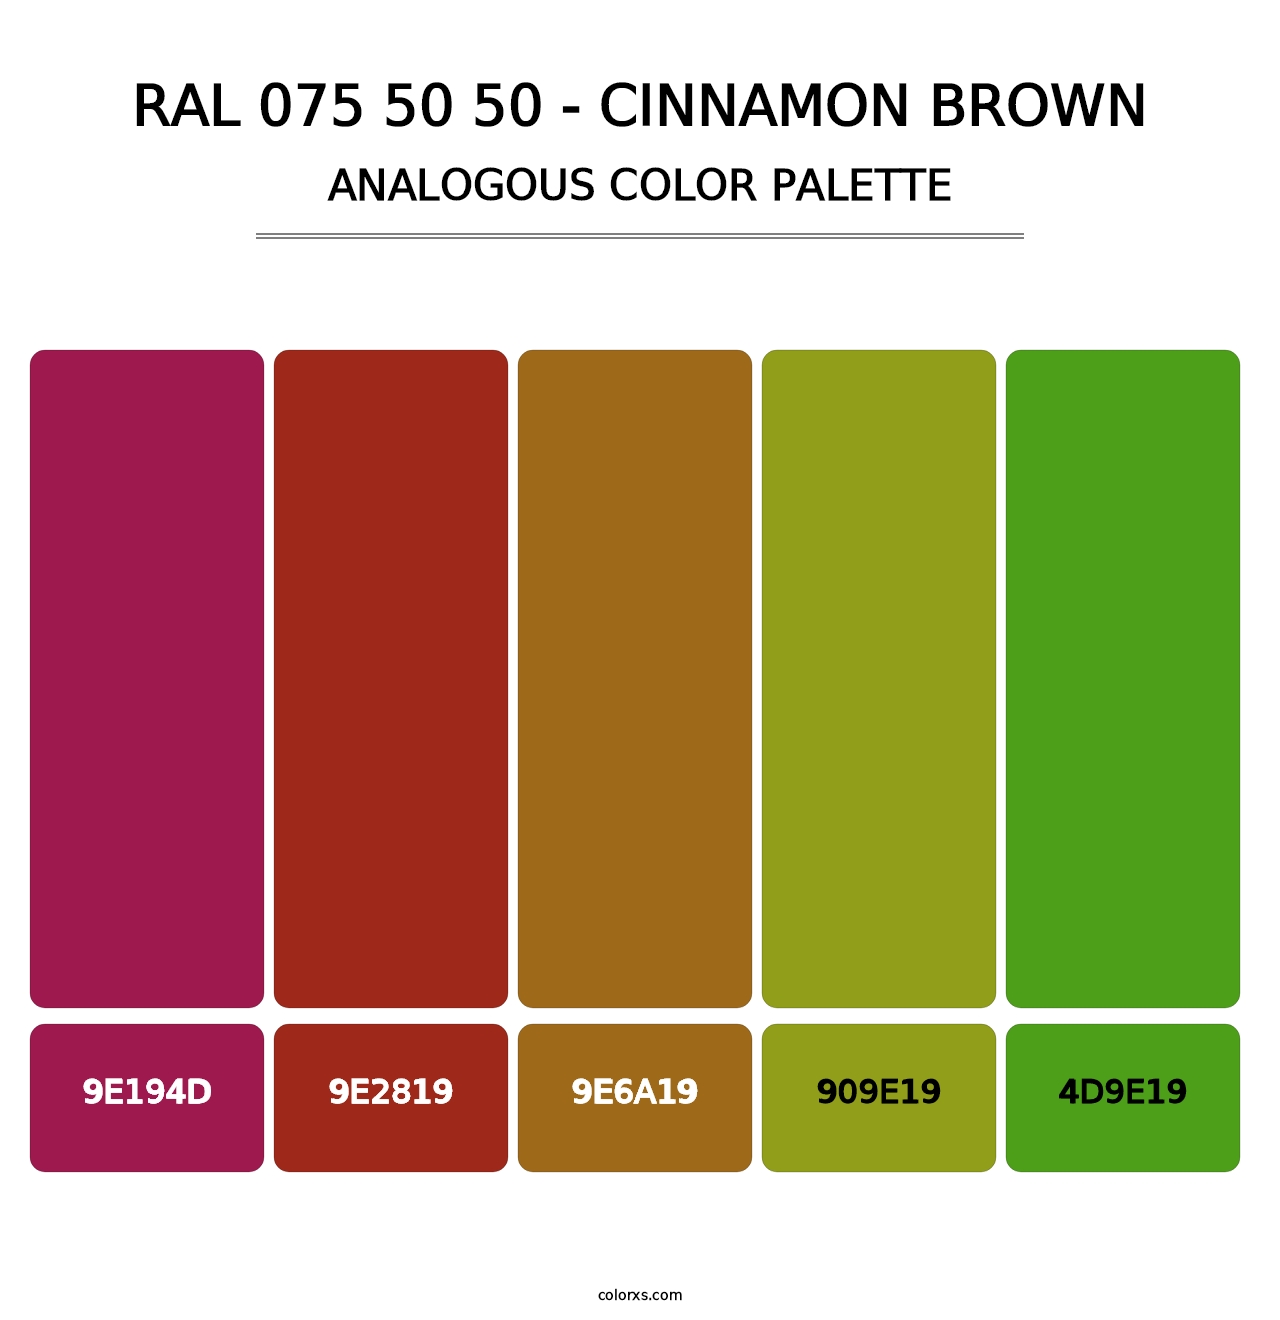 RAL 075 50 50 - Cinnamon Brown - Analogous Color Palette